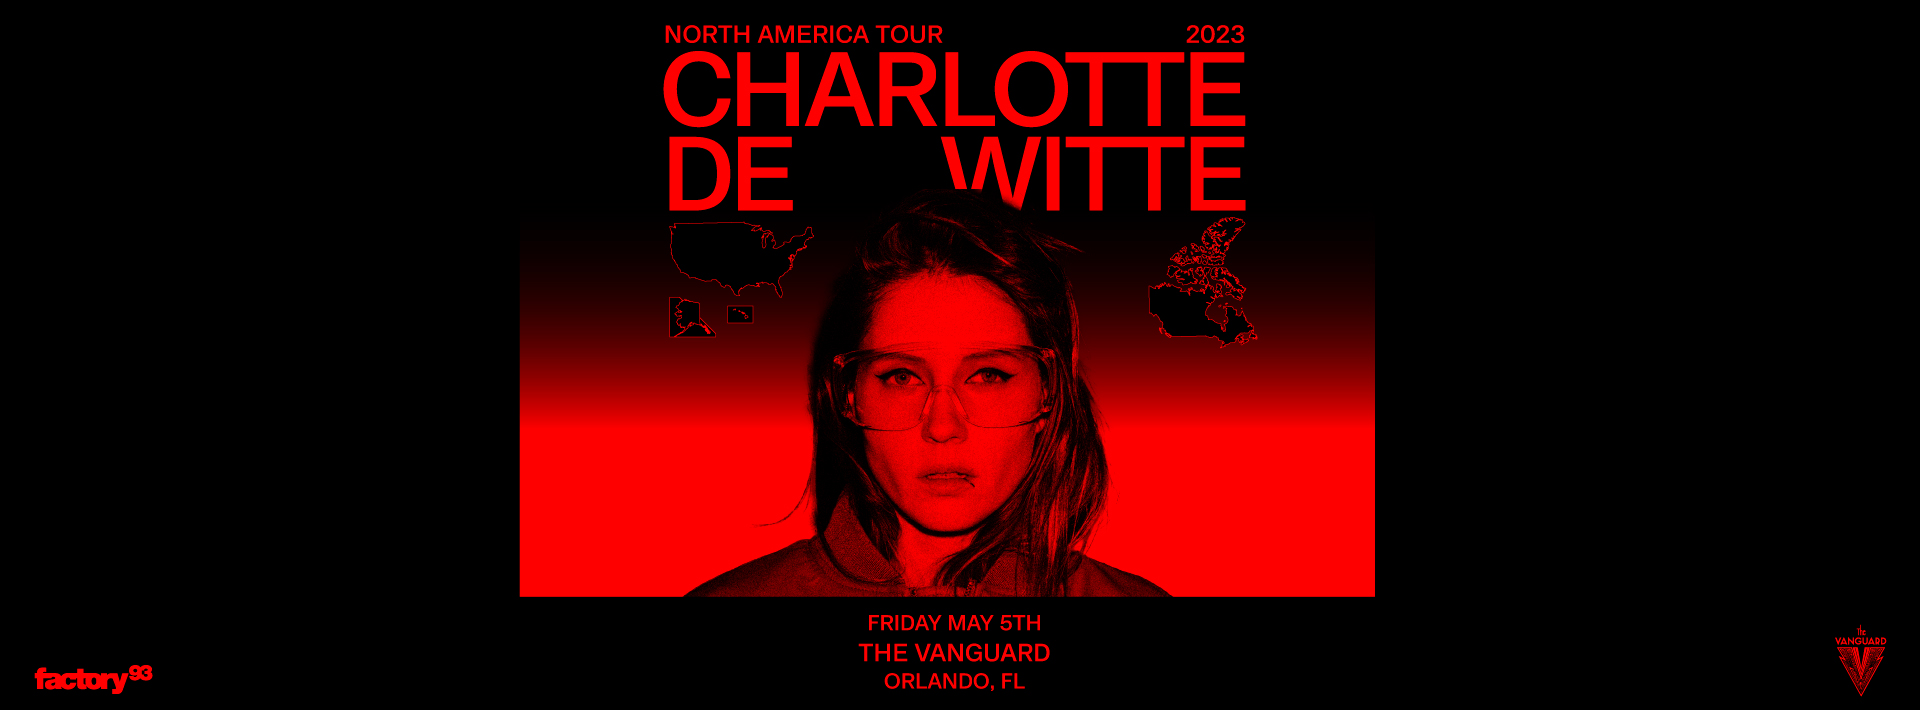 Charlotte de Witte at The Vanguard